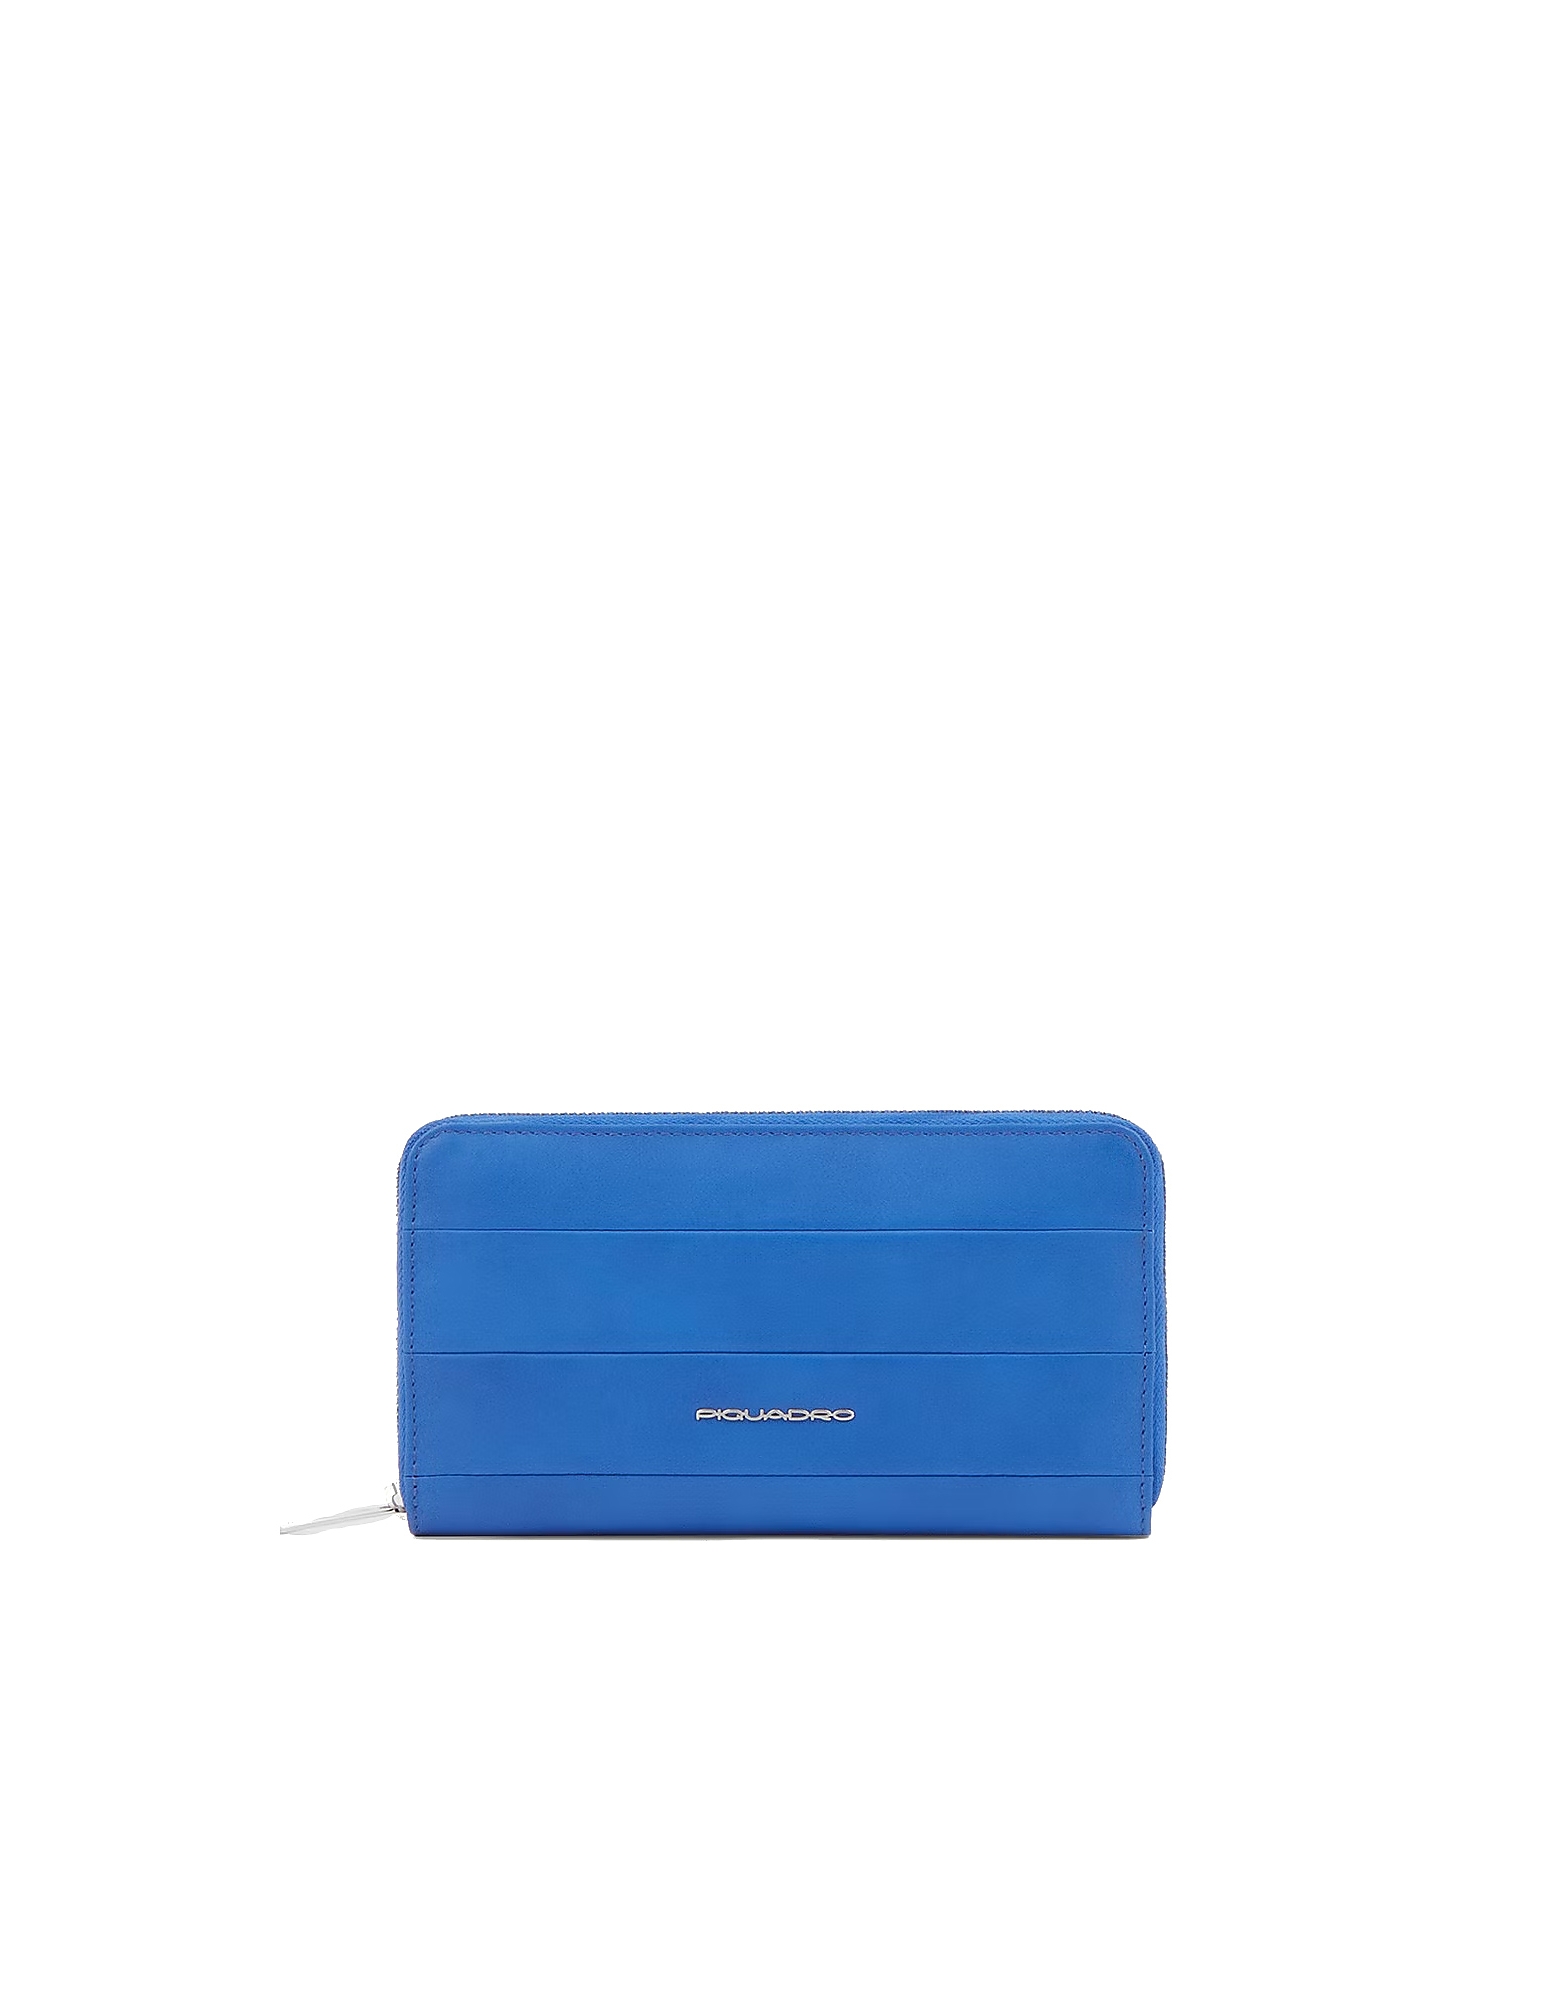 Piquadro Designer Wallets Women's Blue Wallet In Bleu